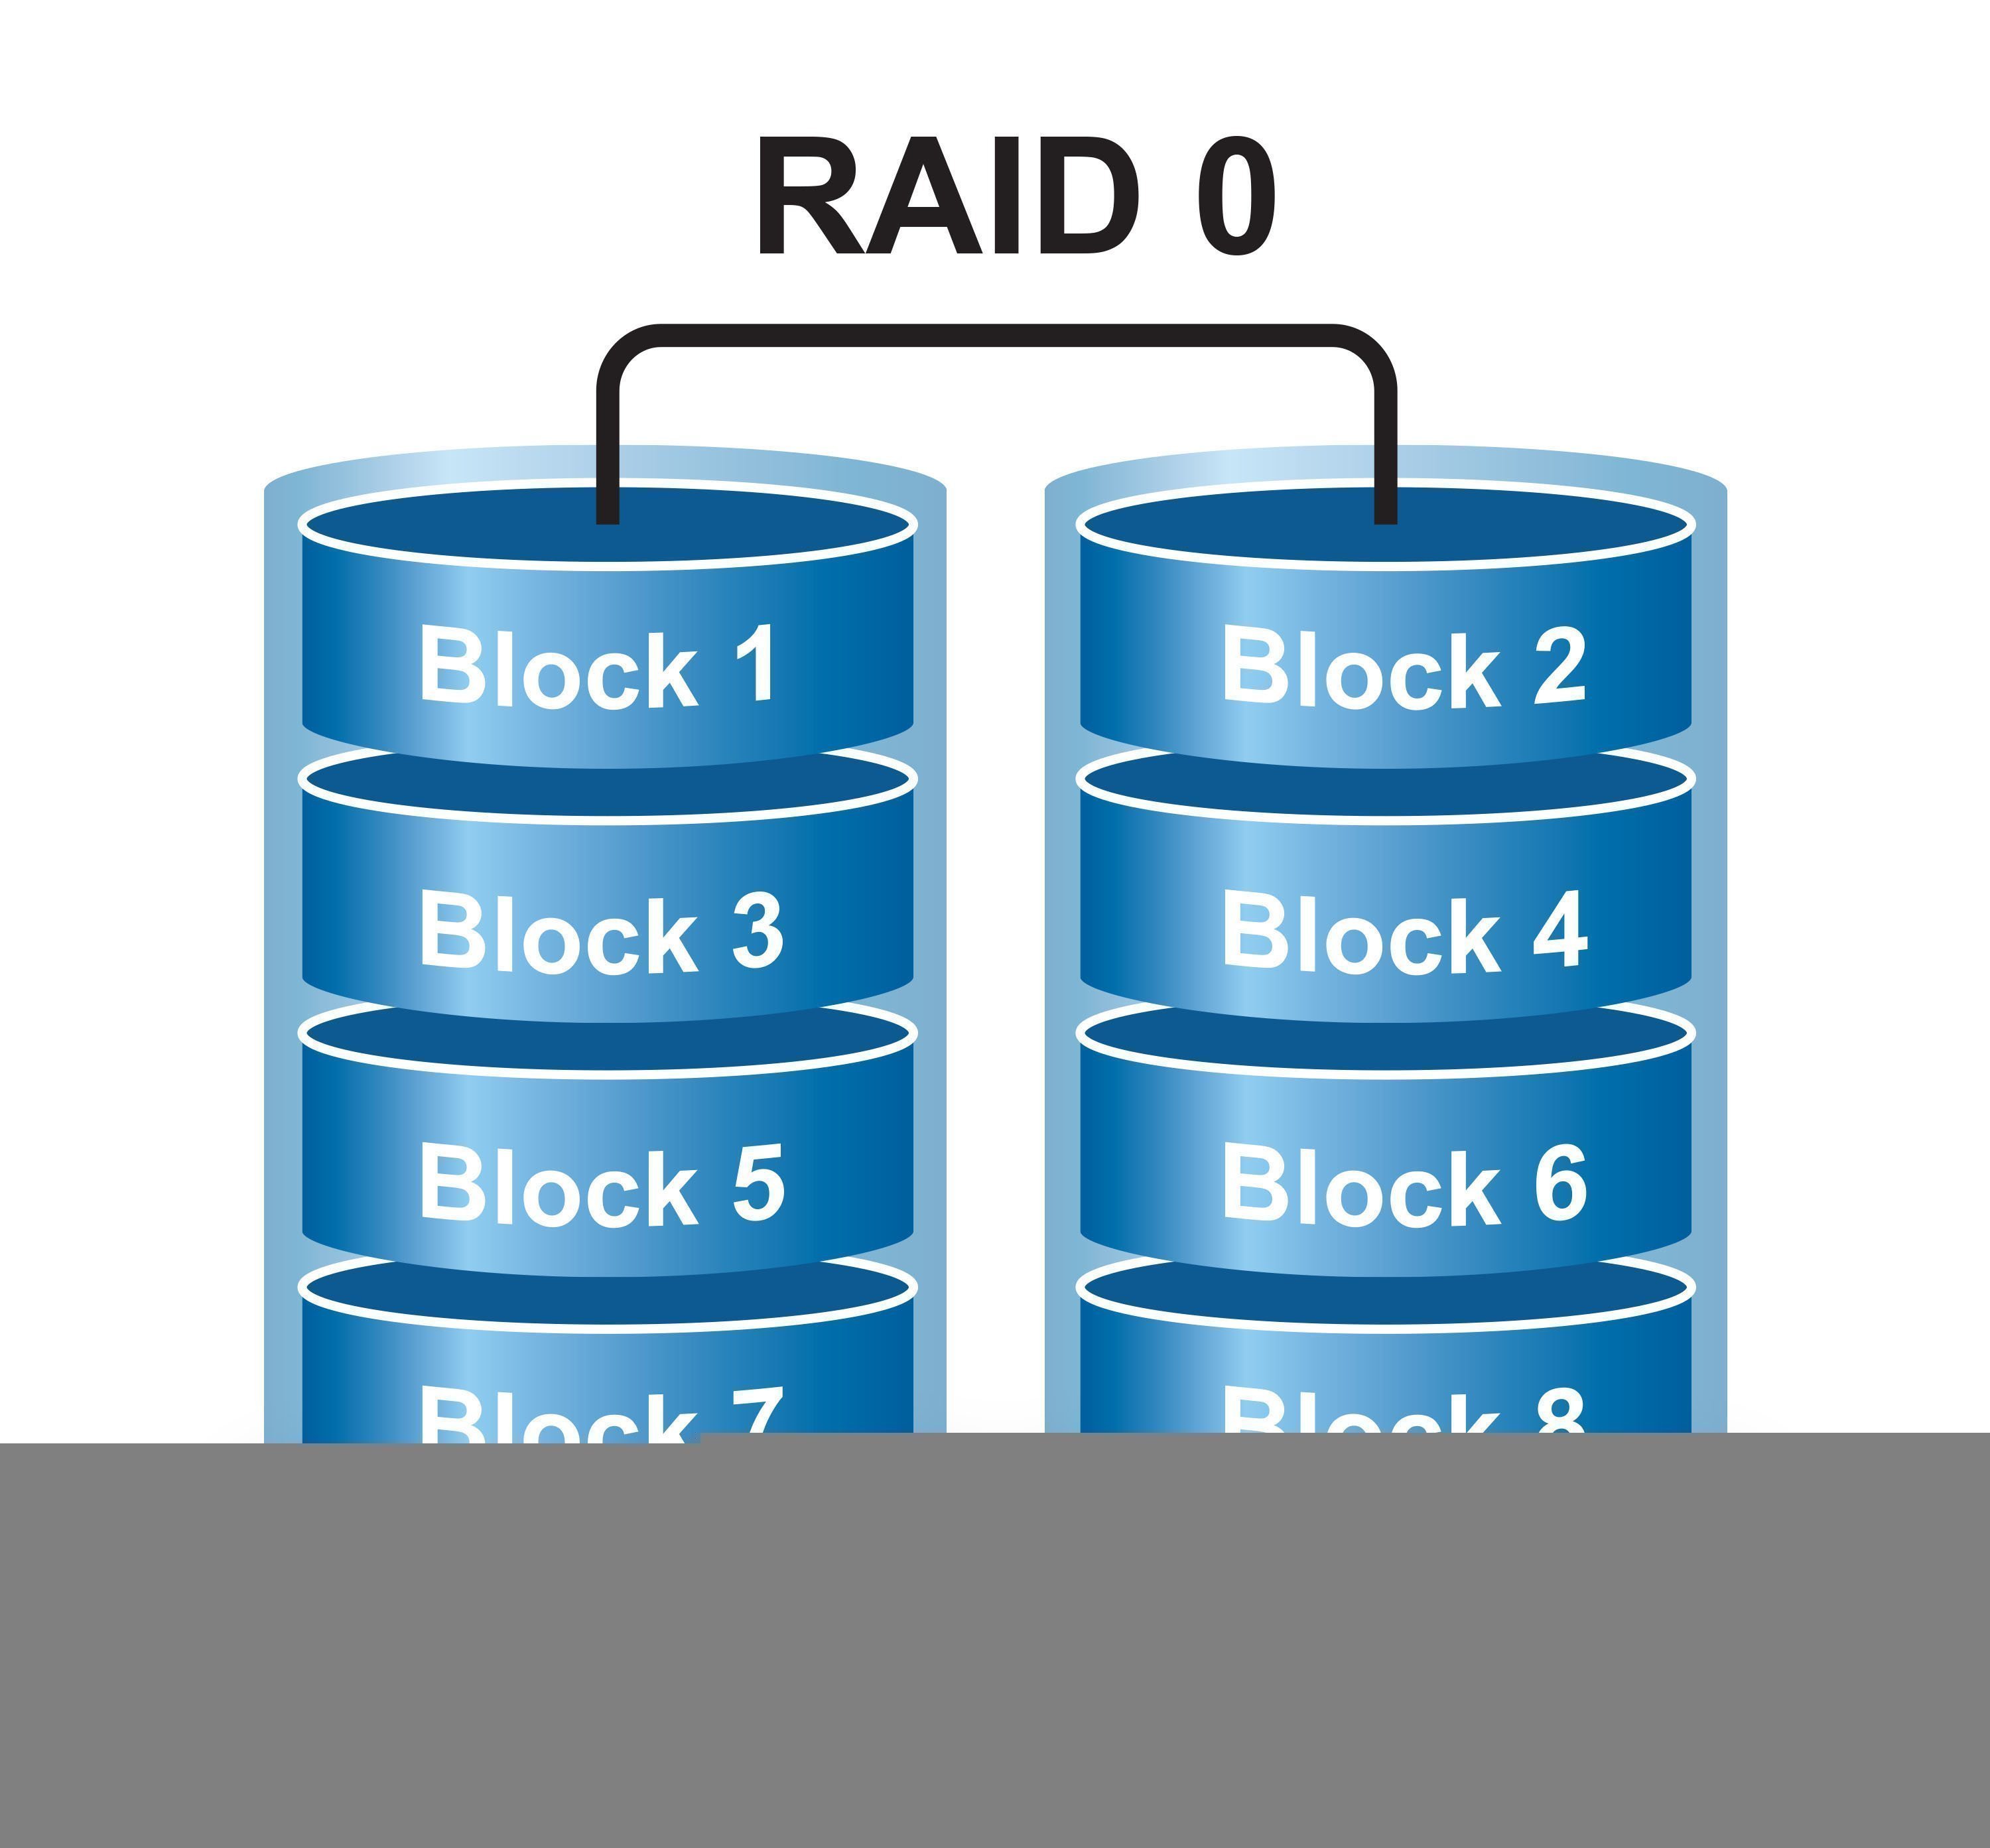 RAID (redundant array of independent disks)